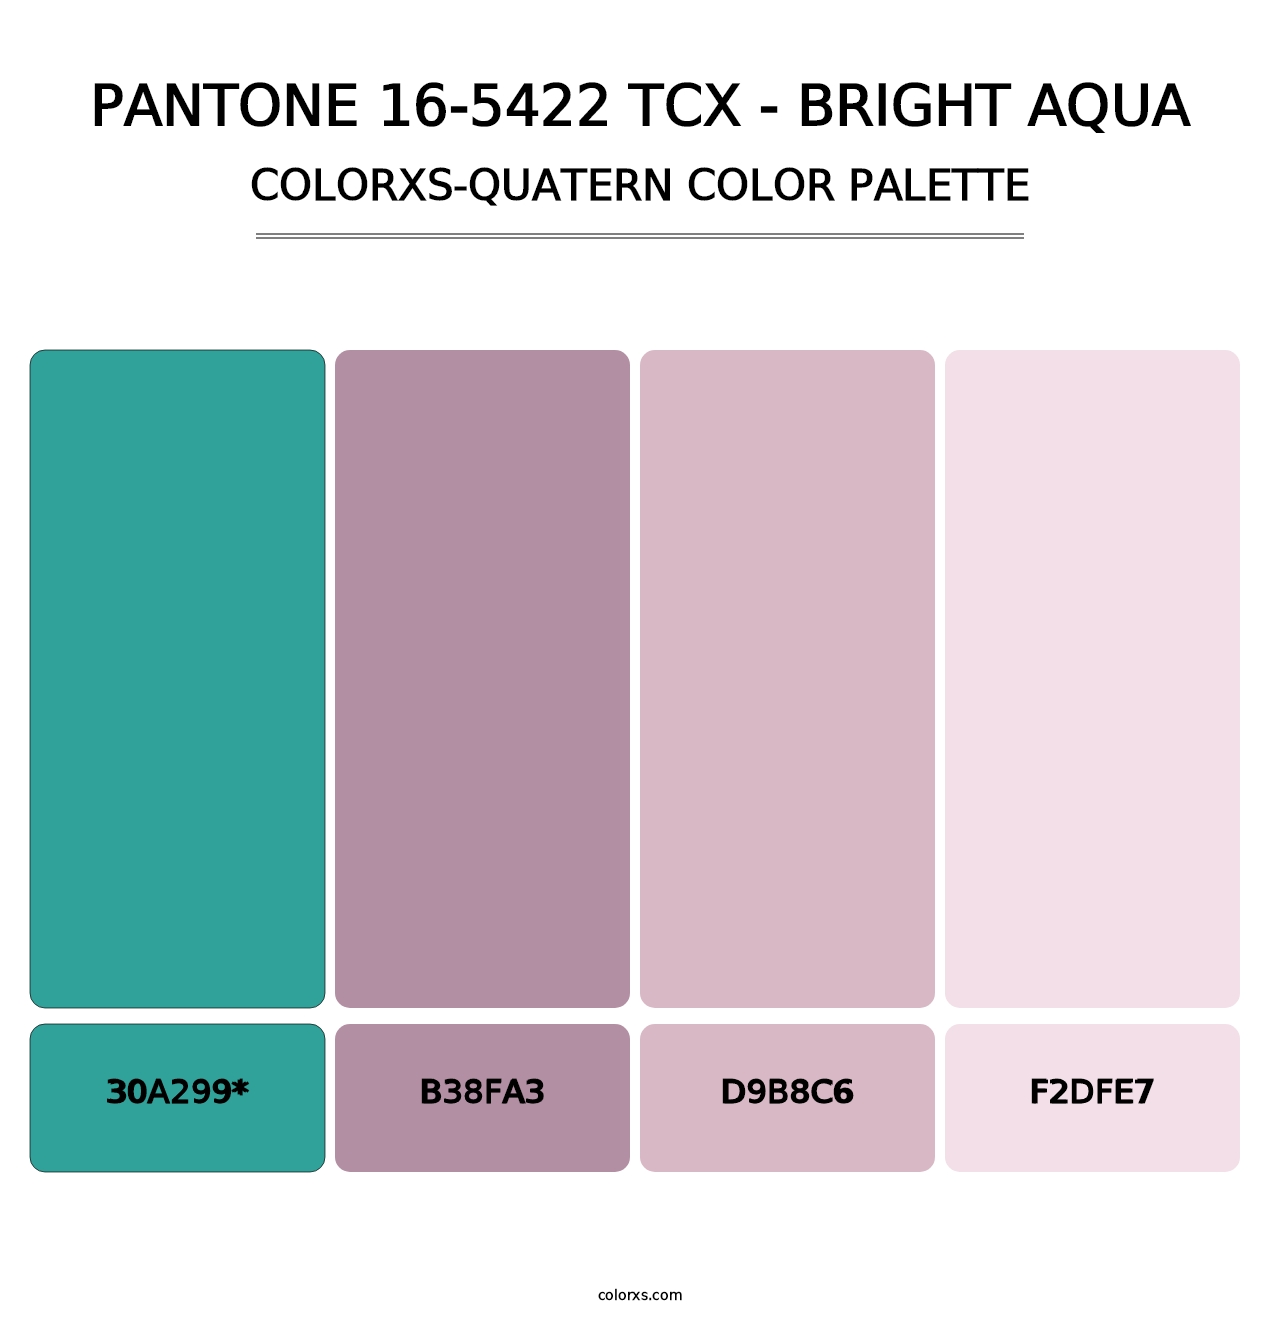 PANTONE 16-5422 TCX - Bright Aqua - Colorxs Quatern Palette